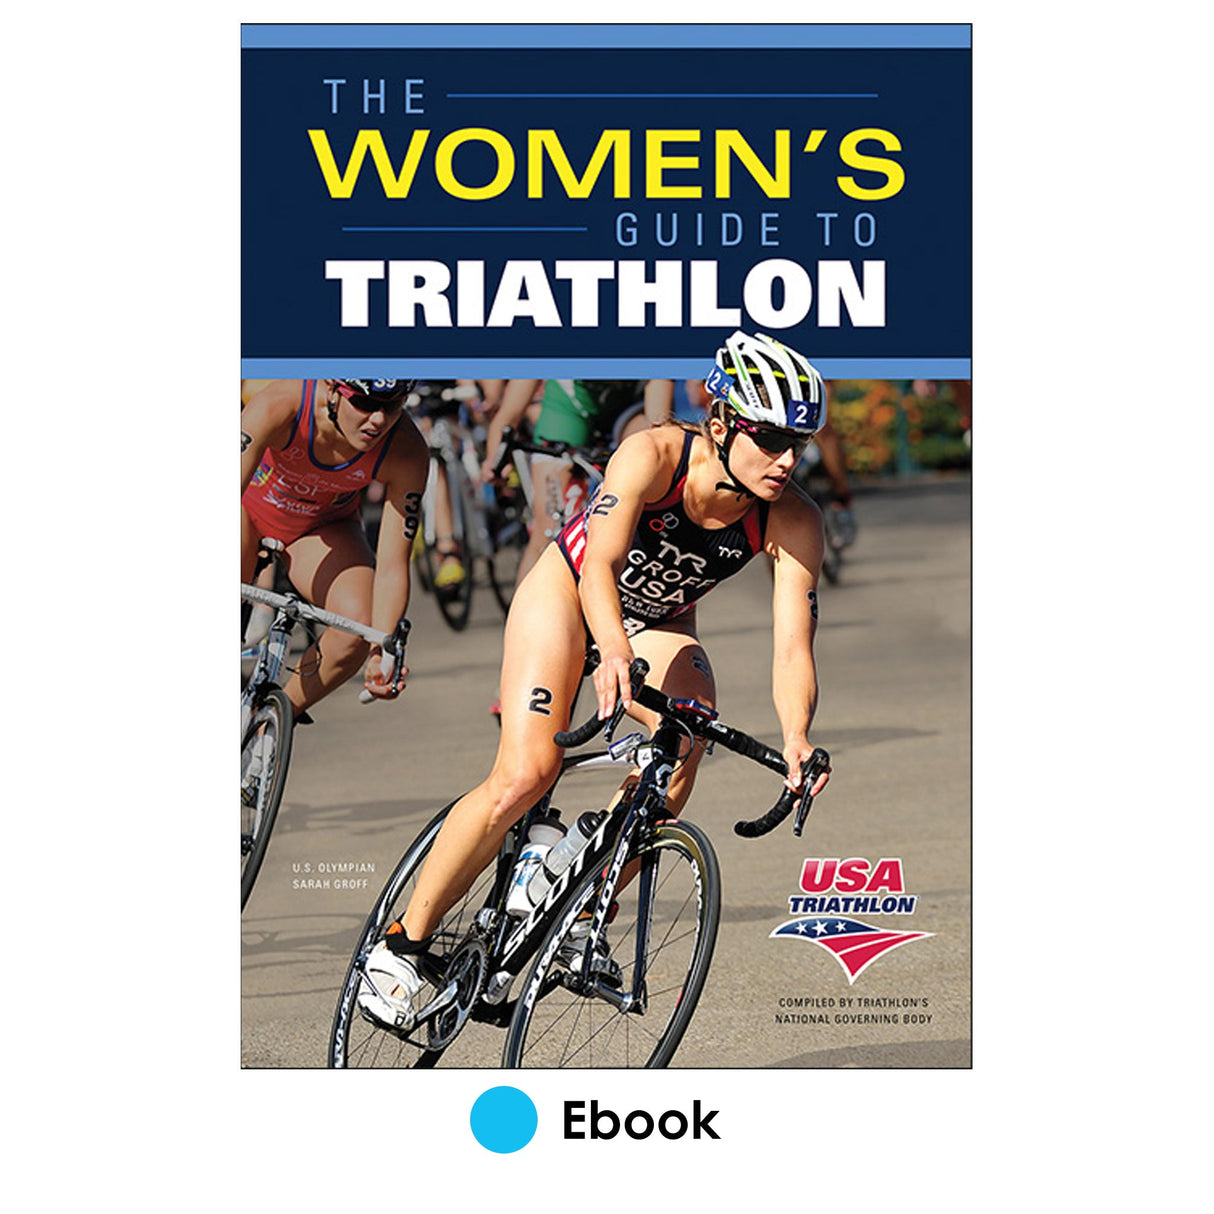 Women's Guide to Triathlon PDF, The